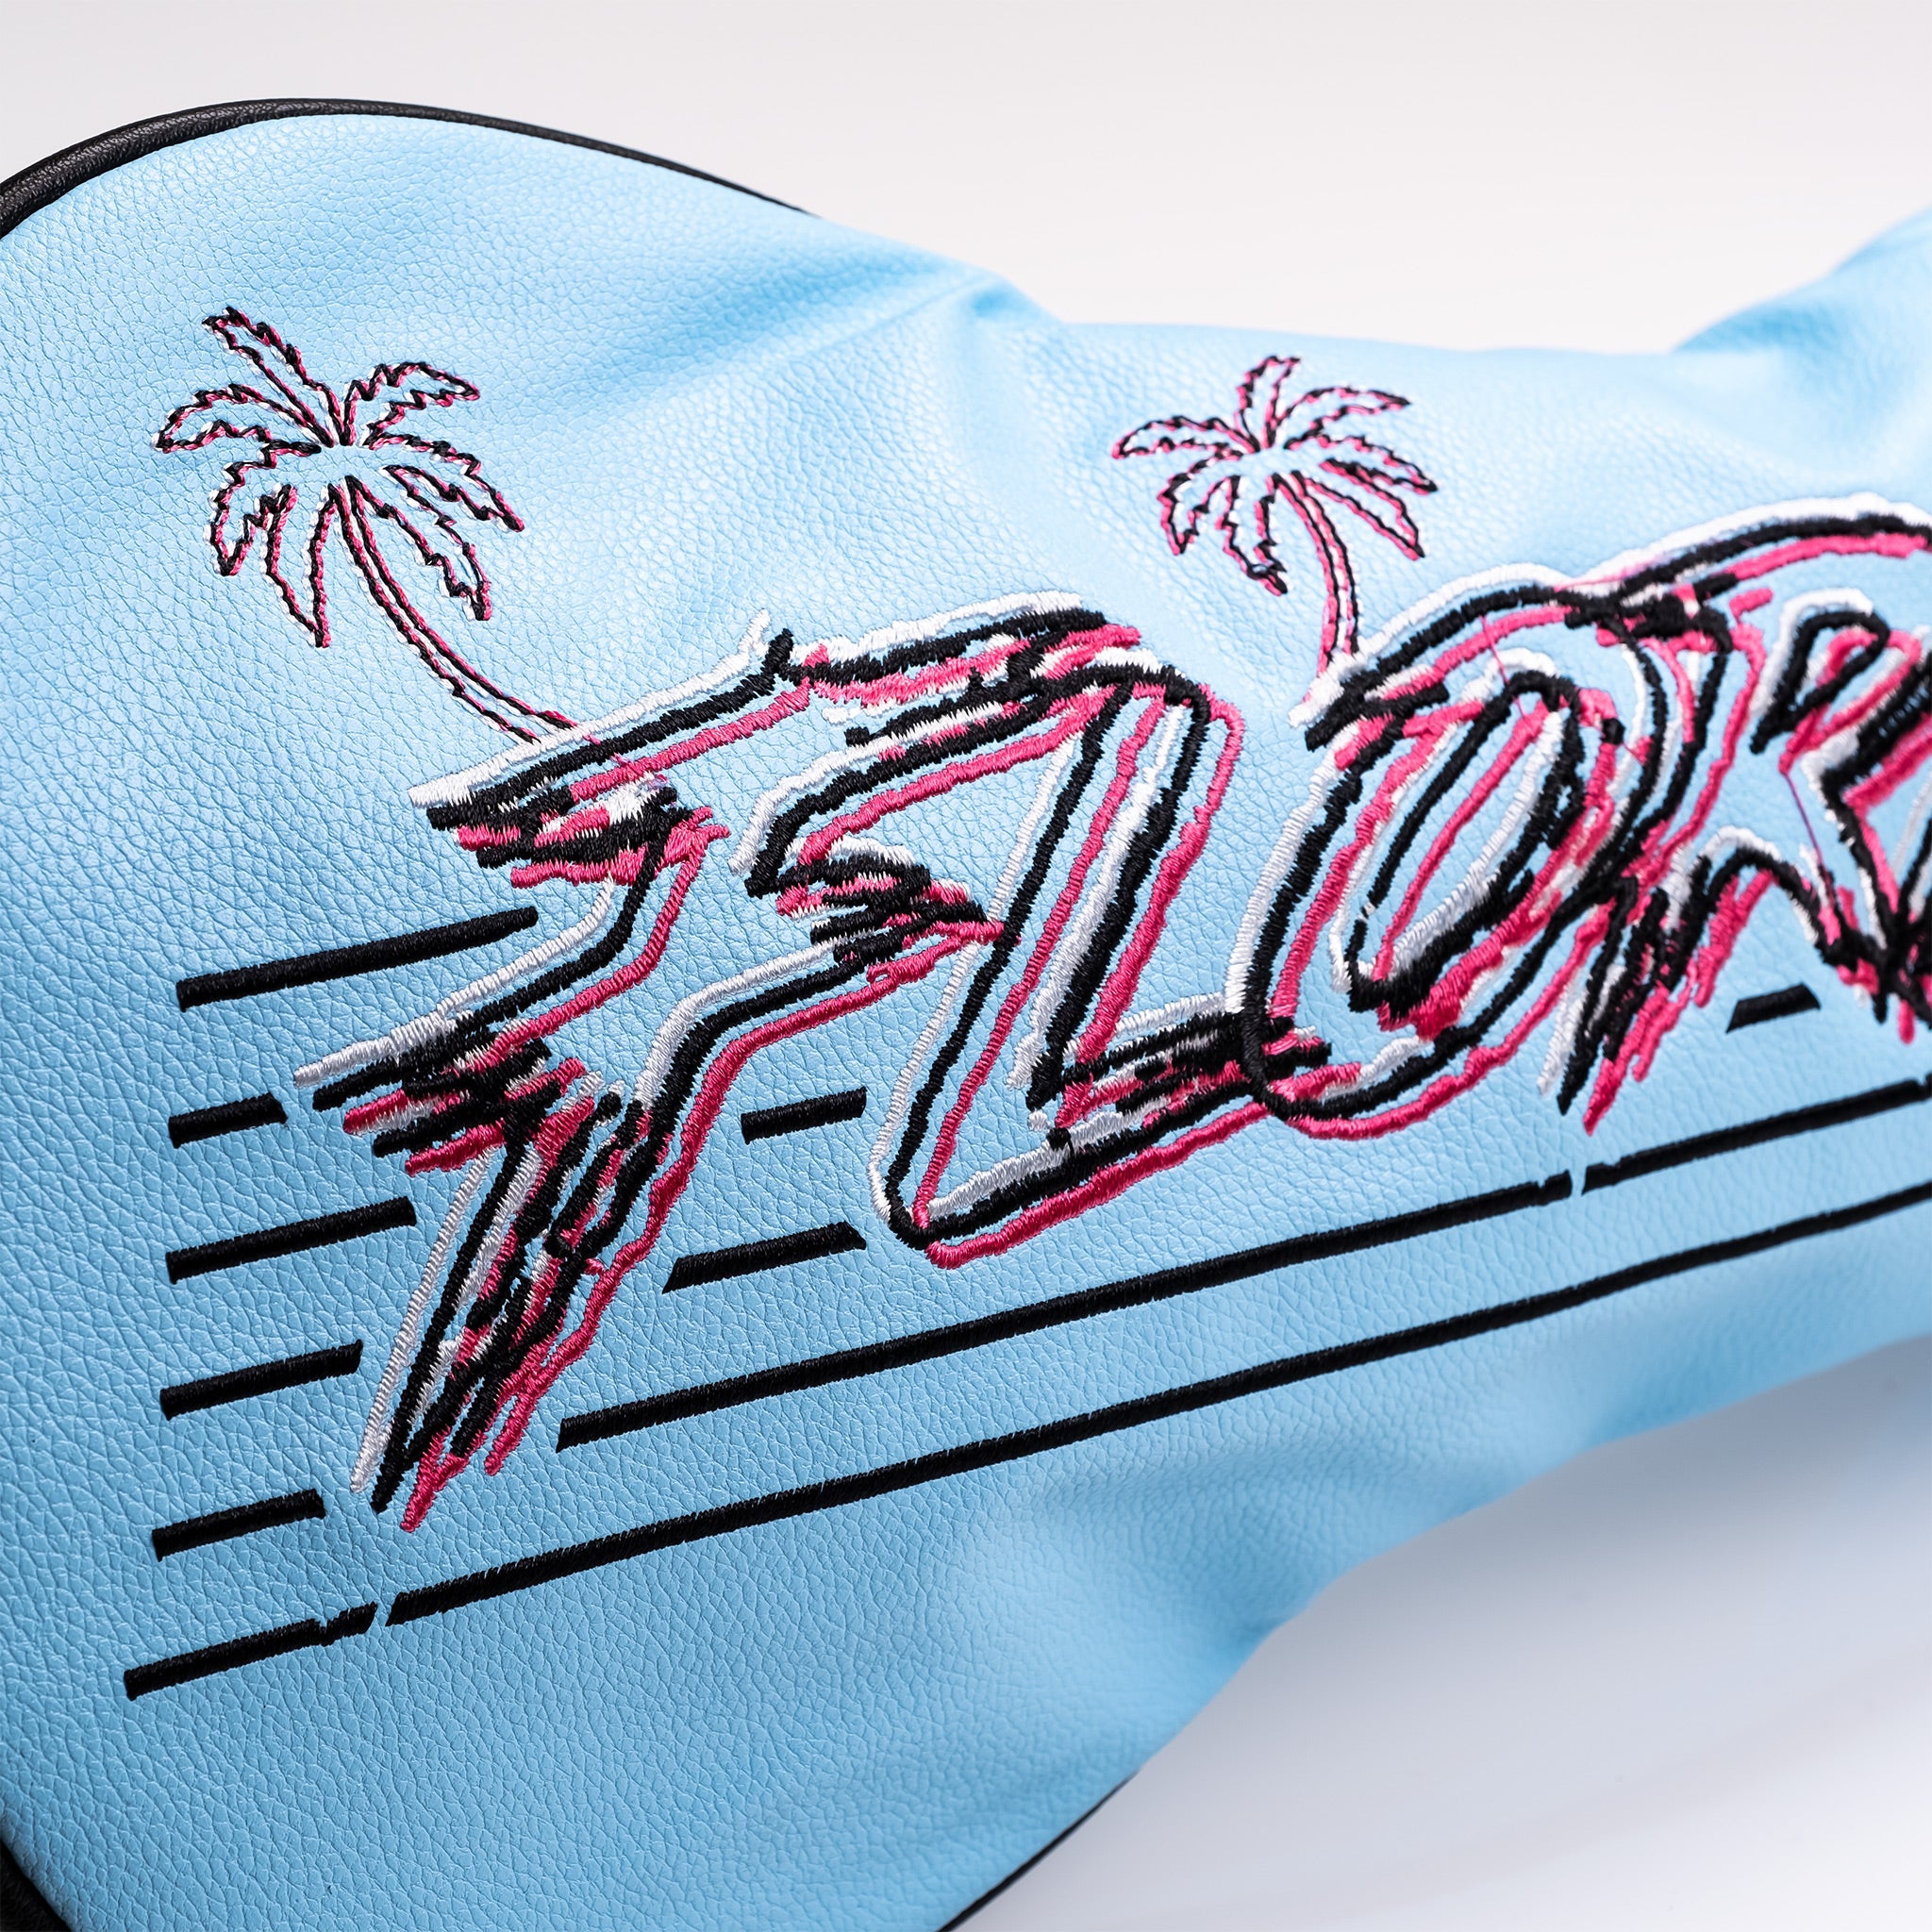 Florida Vice - Fairway Cover